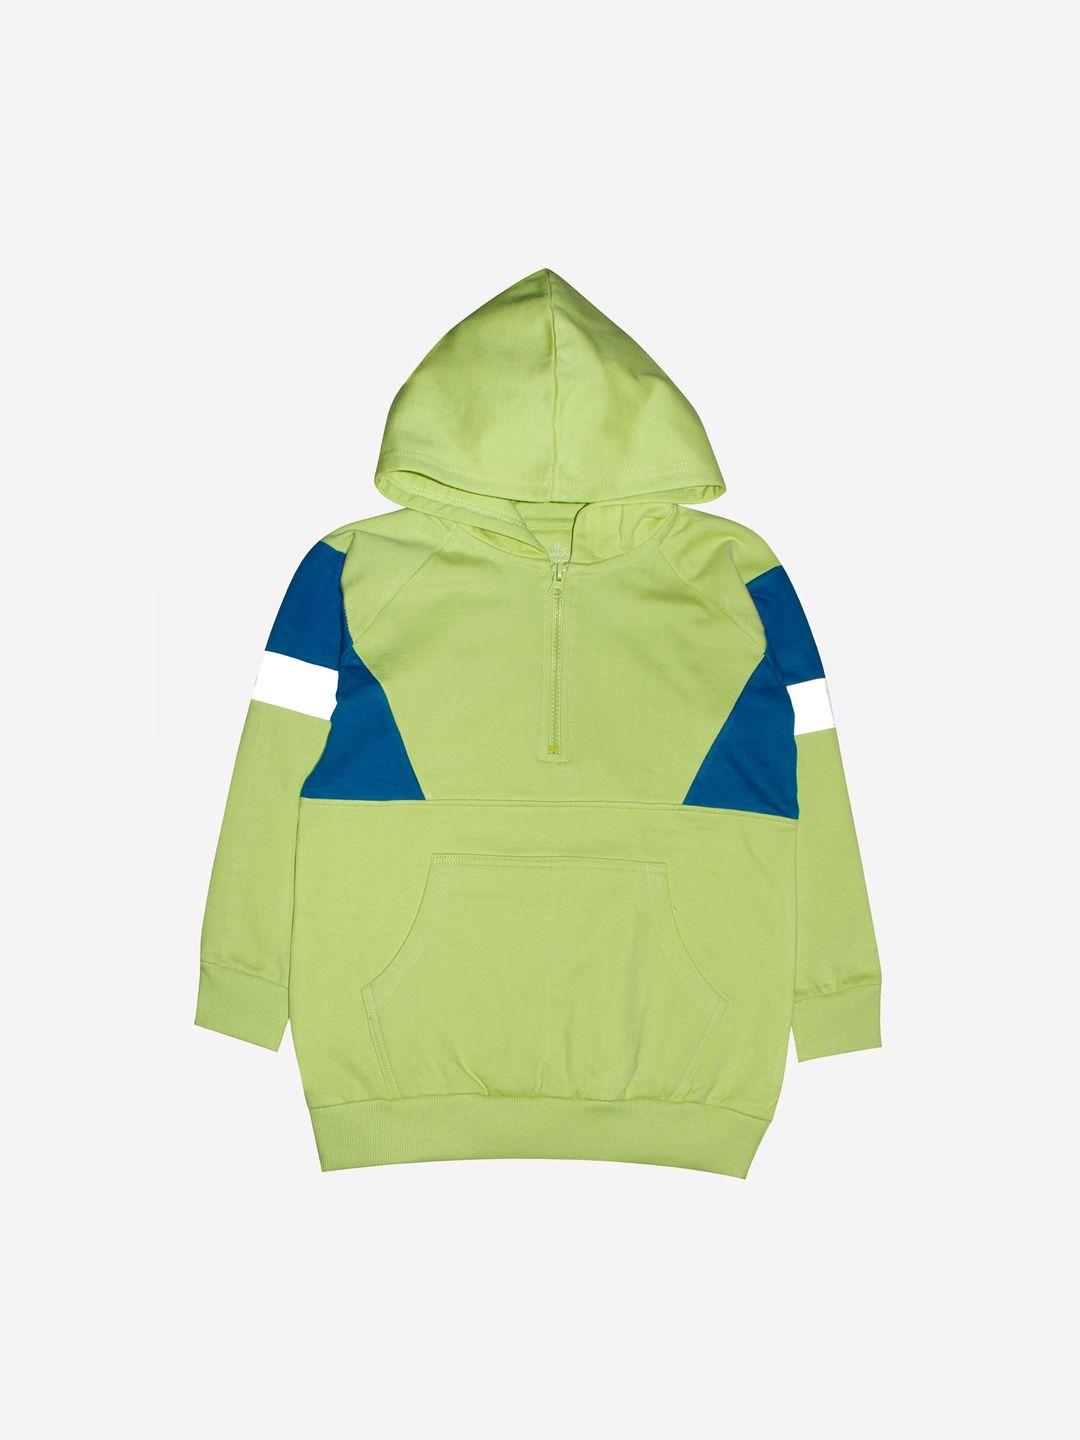 kiddopanti unisex kids green & navy blue colourblocked hooded pure cotton sweatshirt